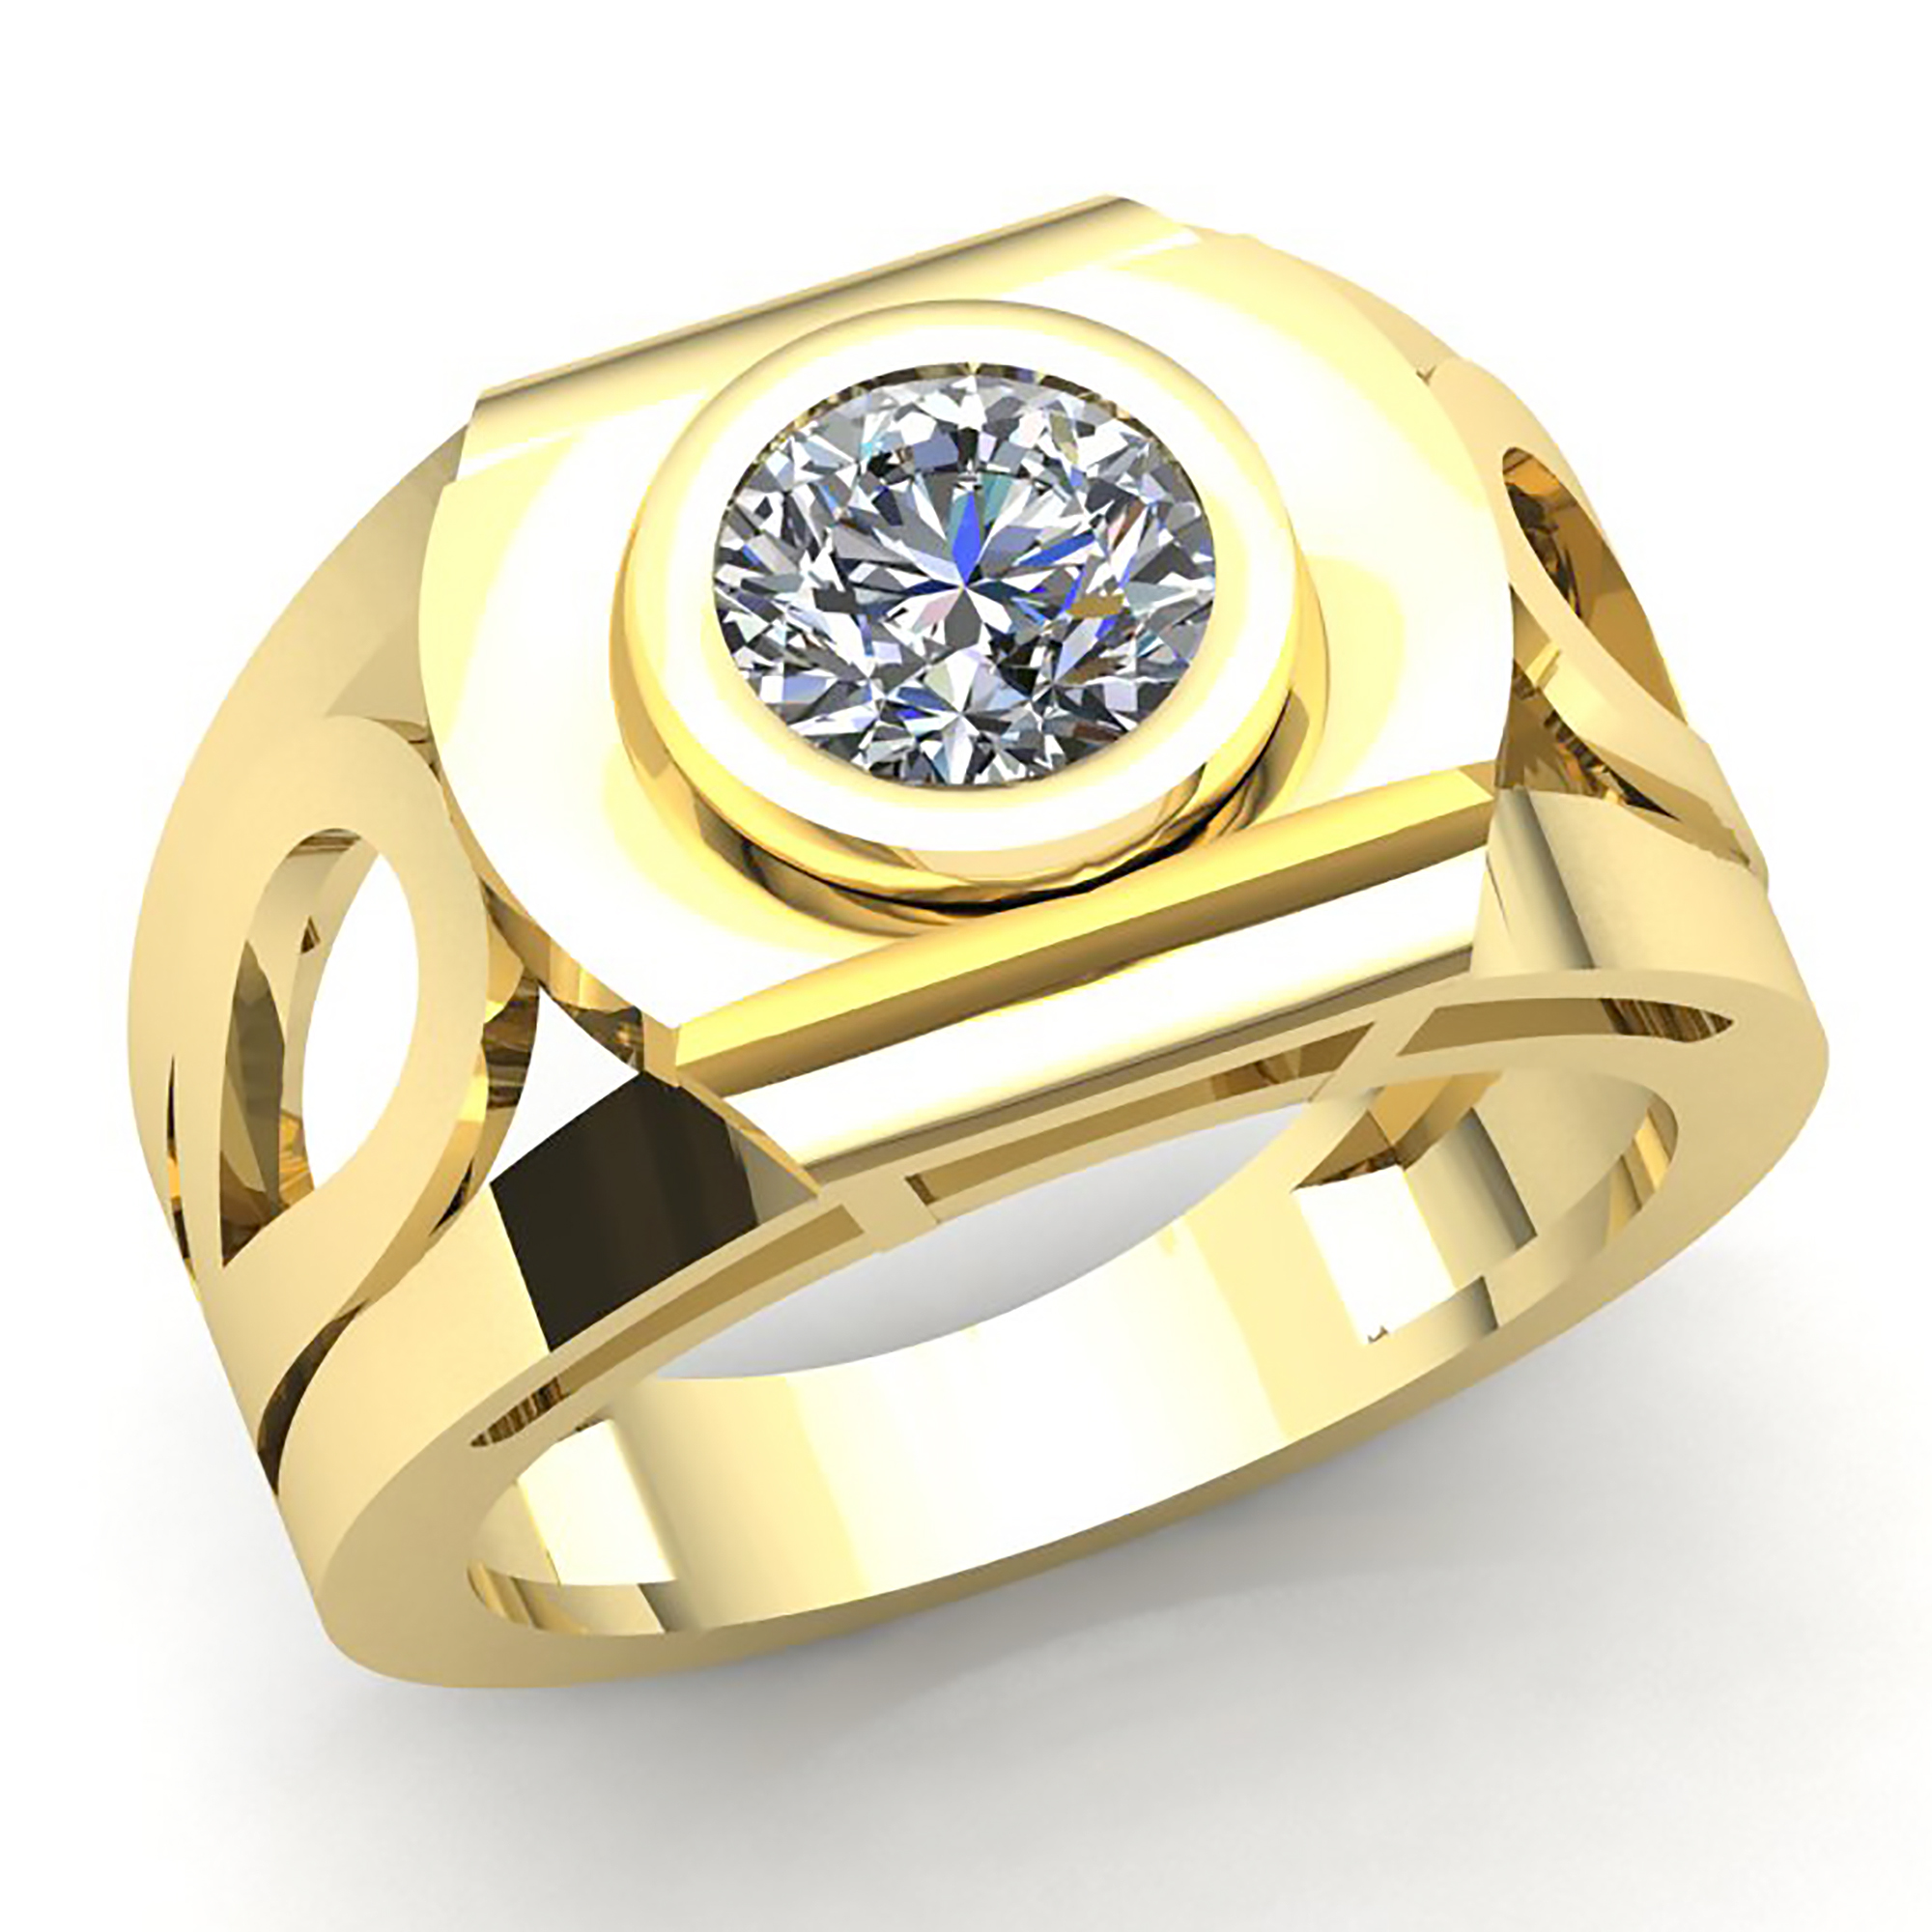 0.33ctw Round Cut Diamond Mens Bezel Set Solitaire Wedding Band Ring 10K Gold | eBay